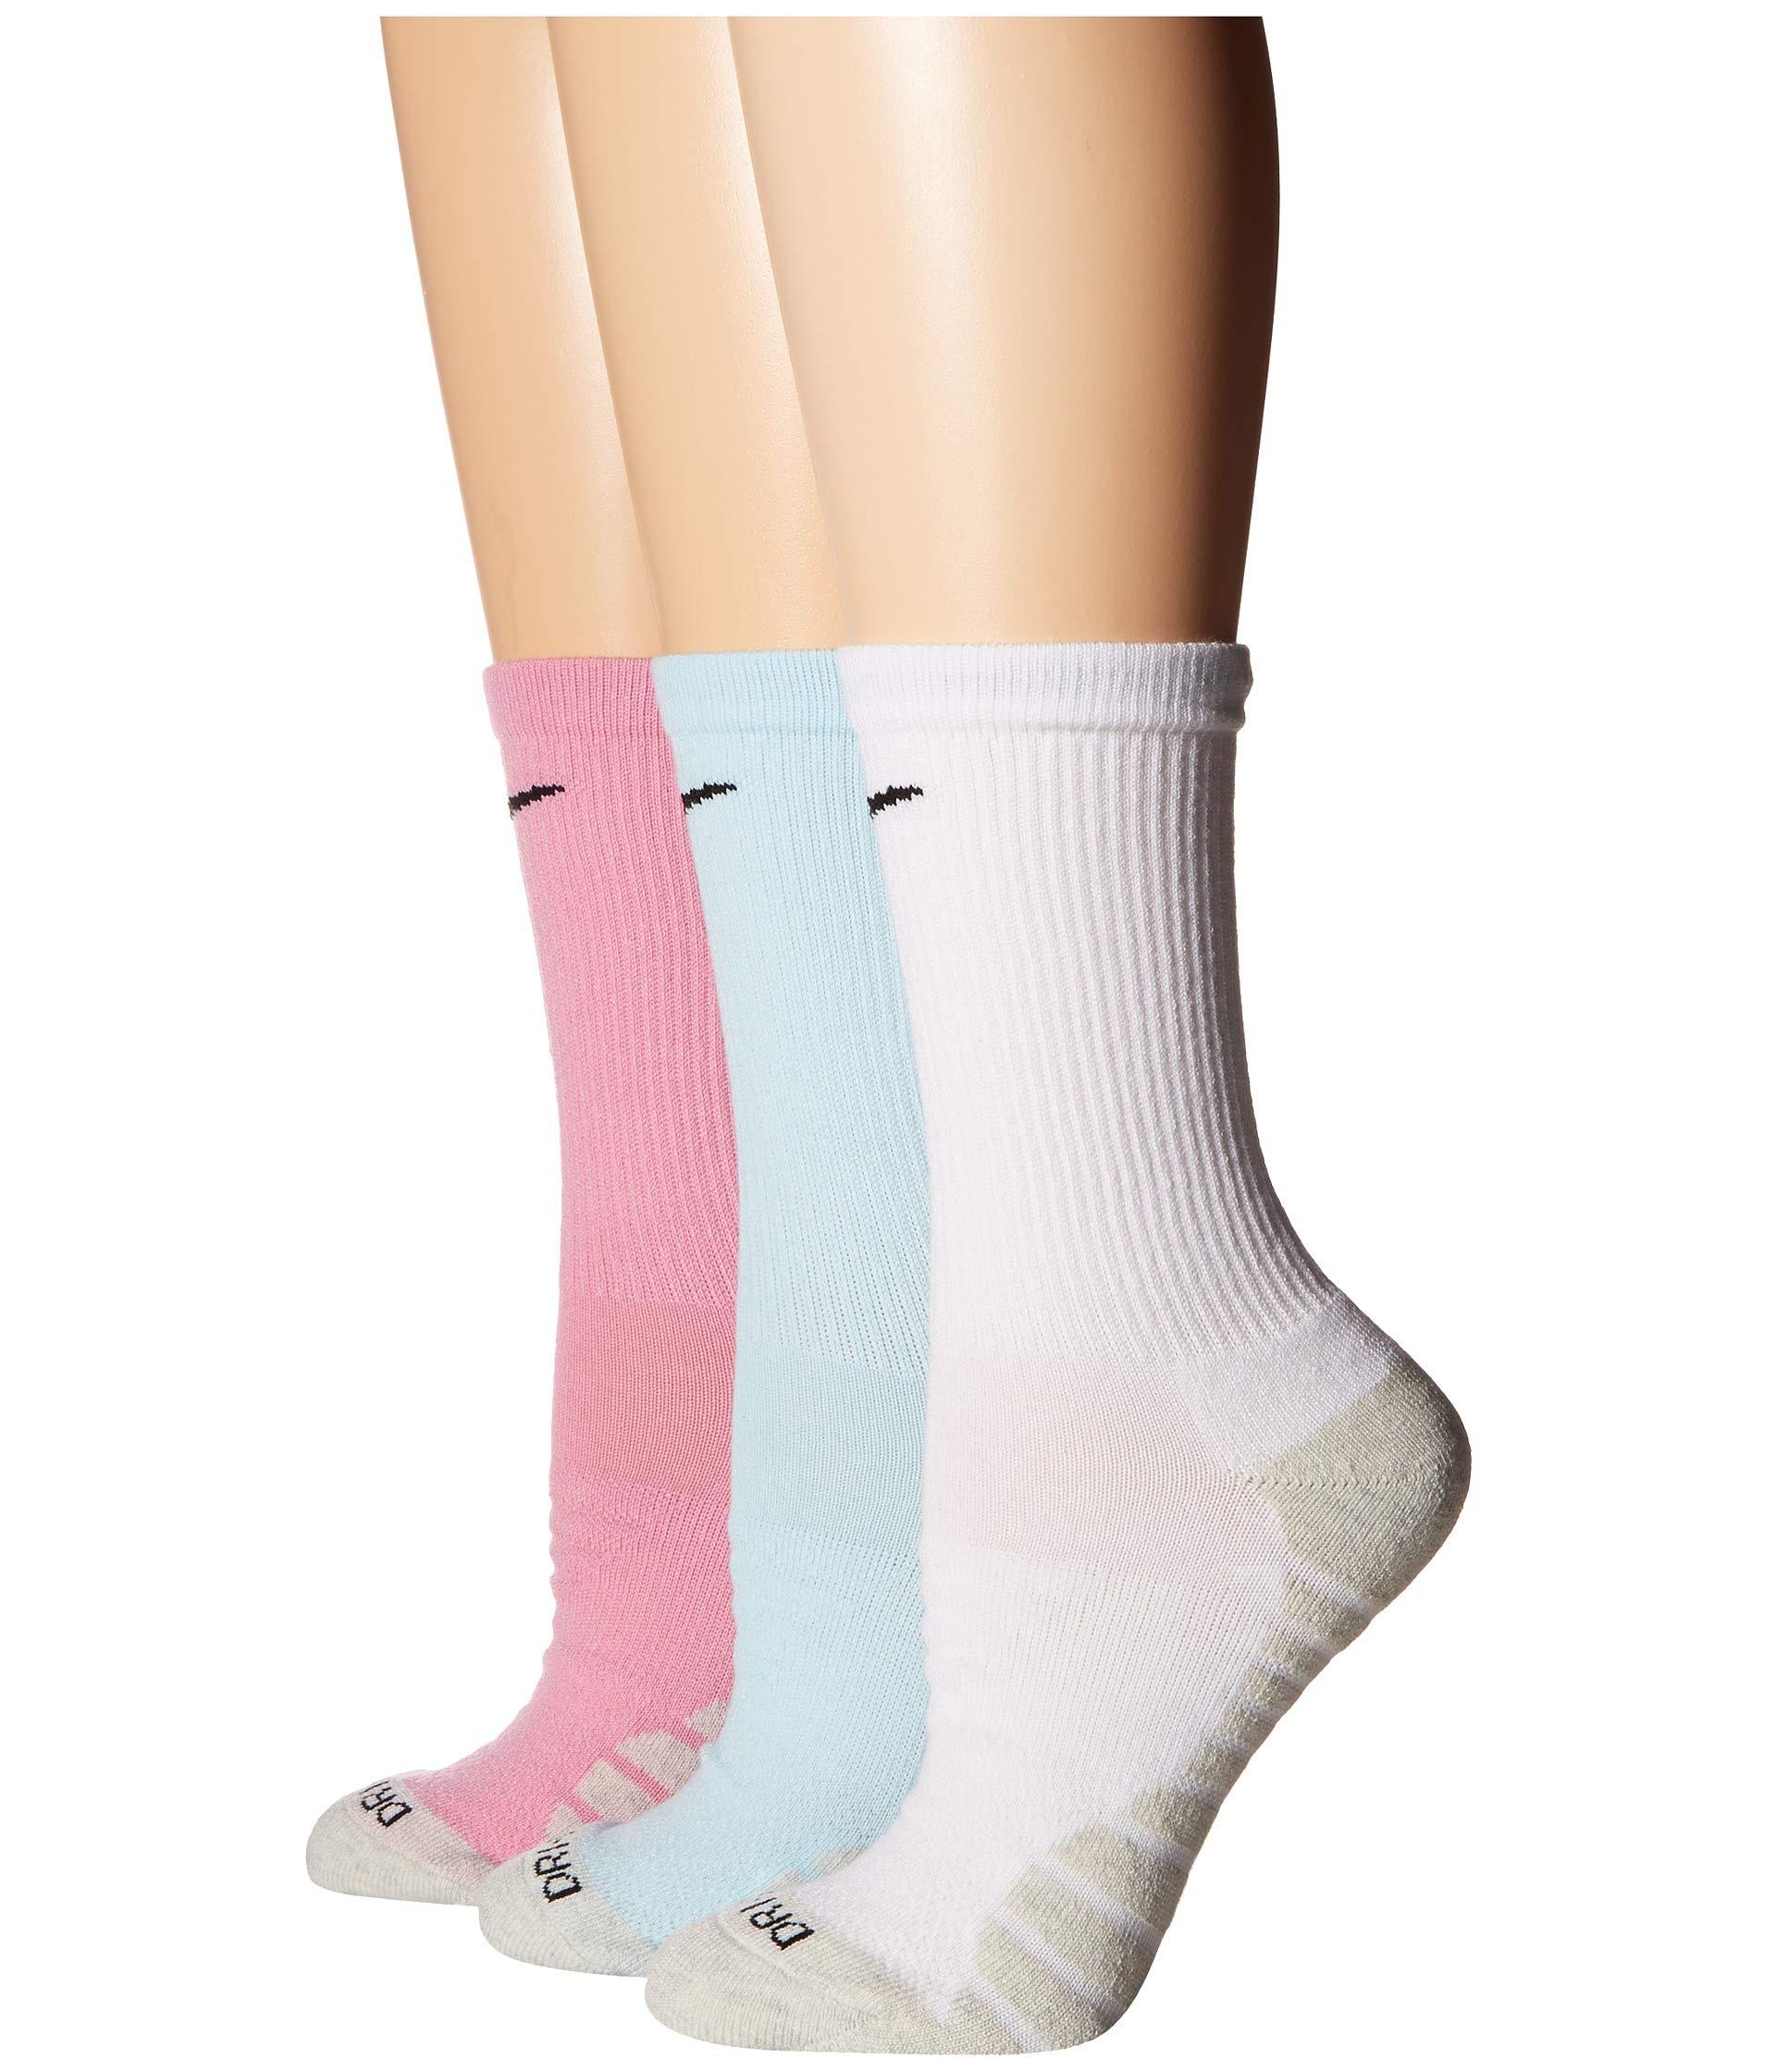 pink nike socks womens